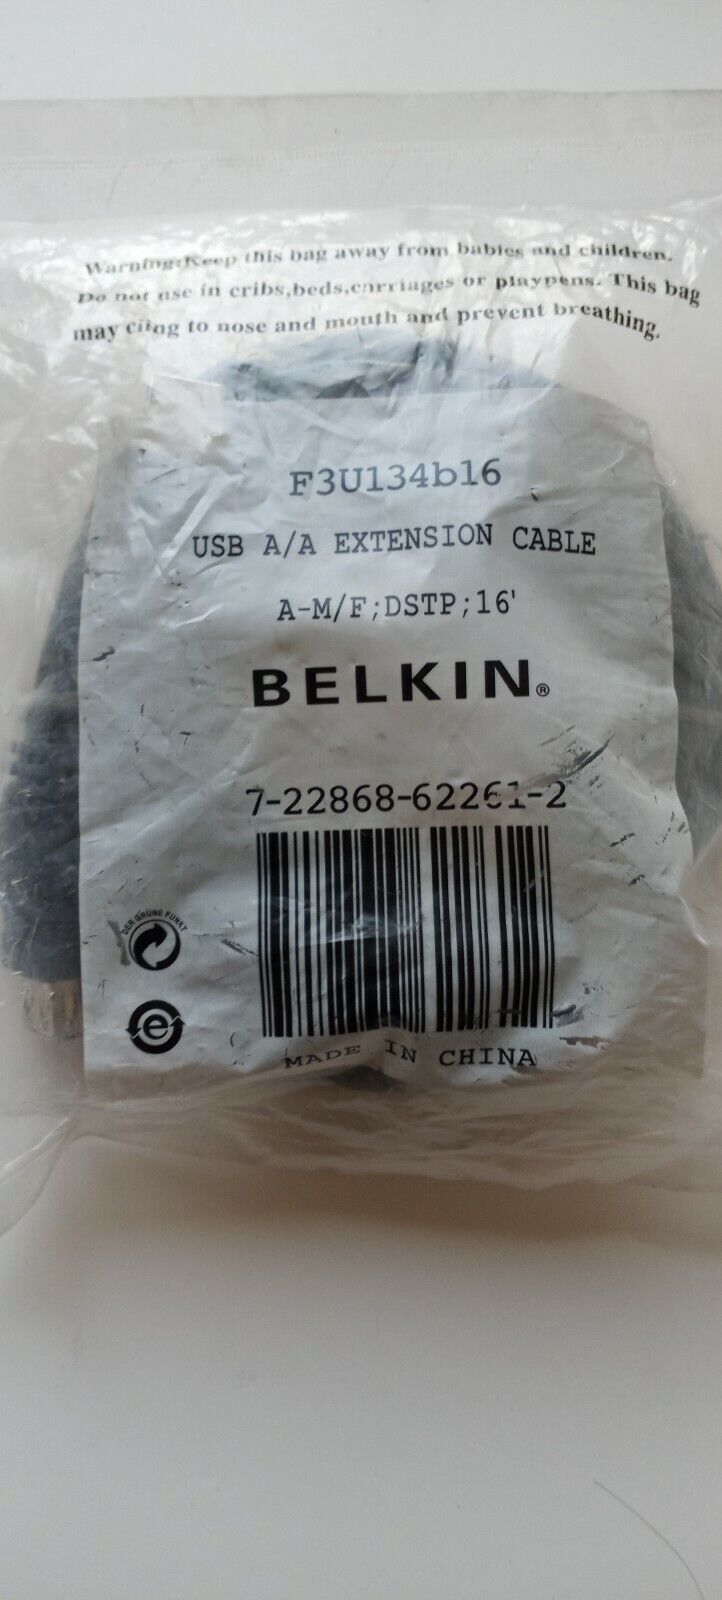 BELKIN F3U134b16 USB A/A EXTENSION CABLE 16'